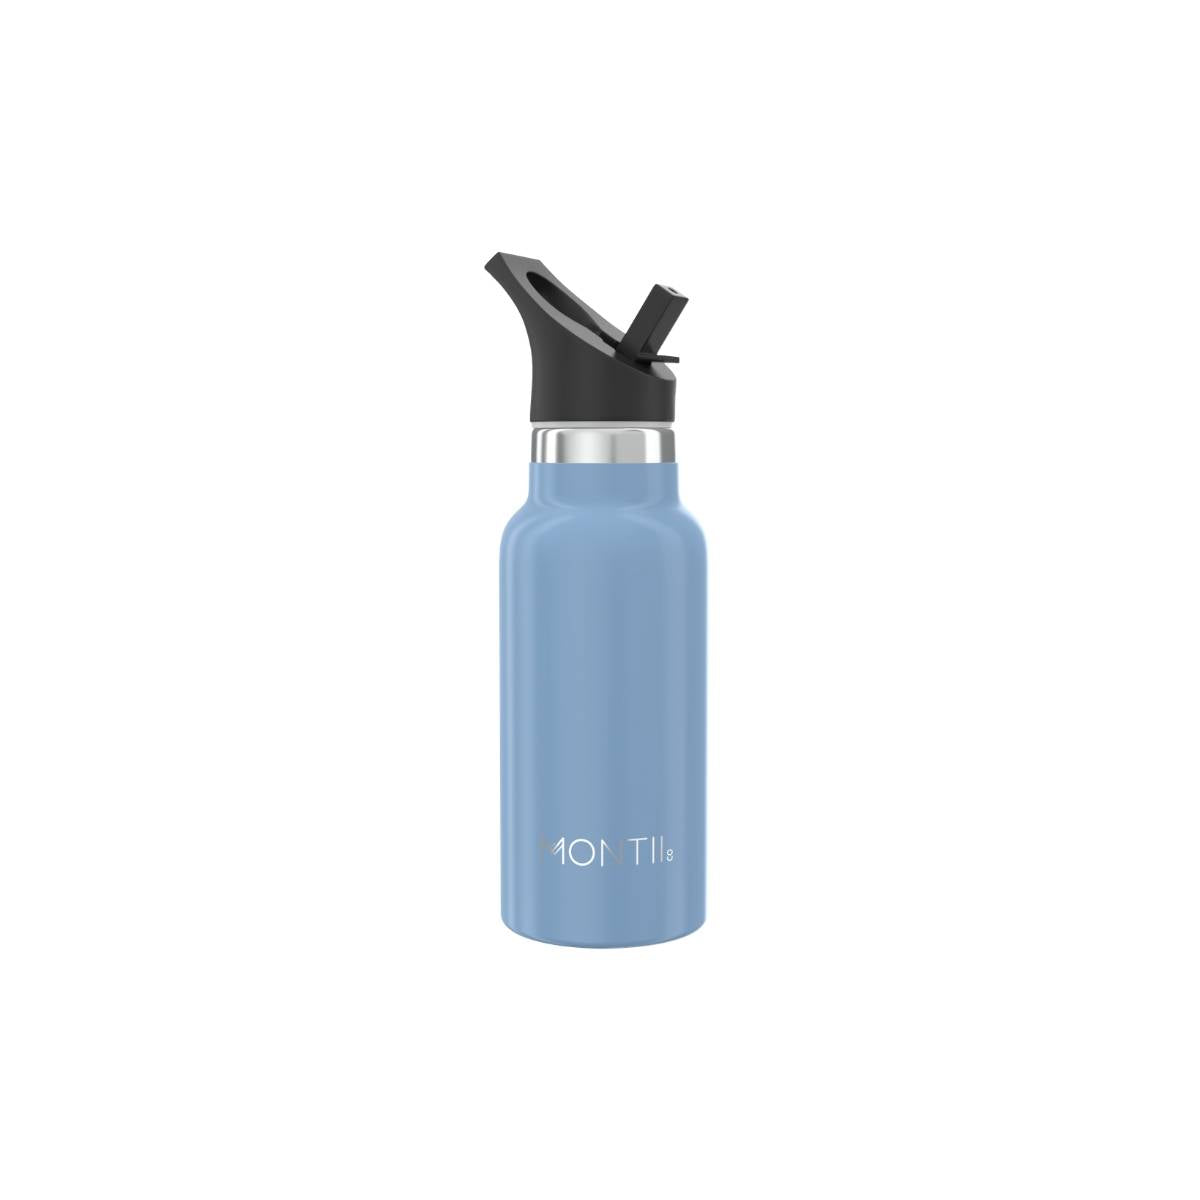 MontiiCo - Water Bottle - Mini